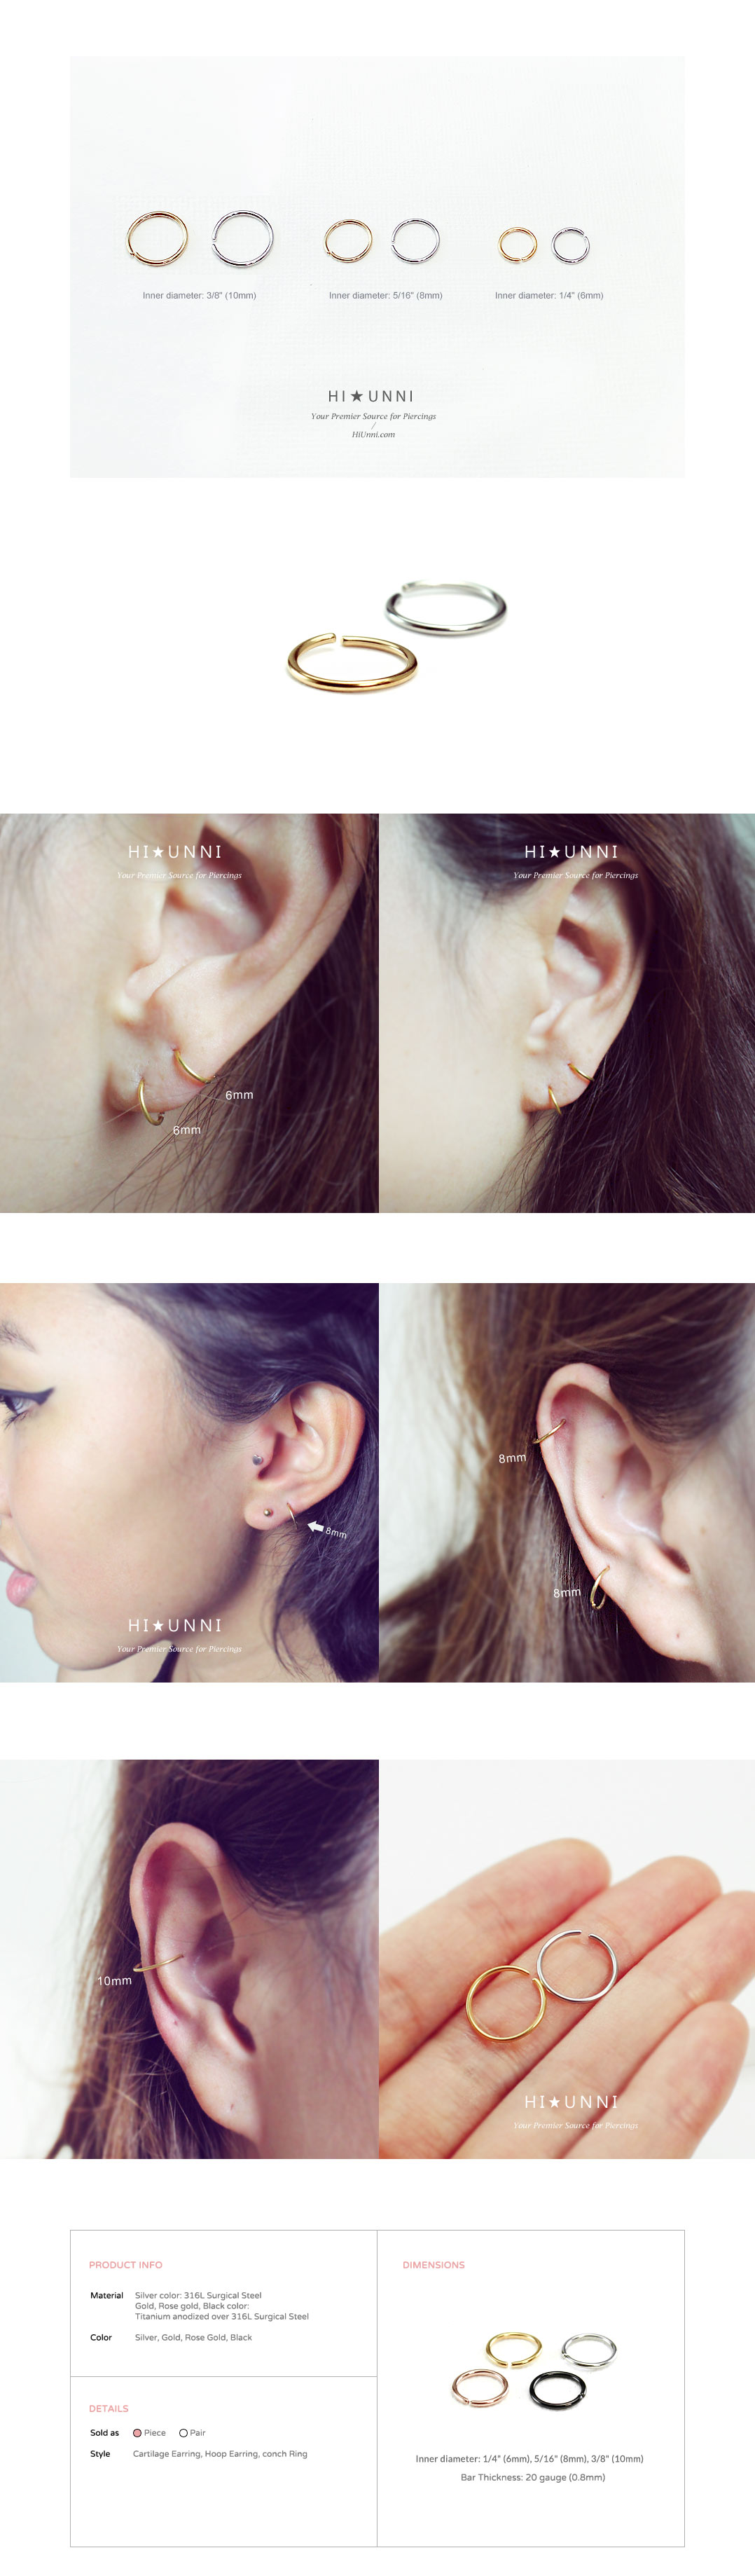 ear_studs_piercing_cartilage_earrings_16g_316l_surgical_stainless_steel_body_jewelry_hoop_conch_rings_20g_20gauge_4